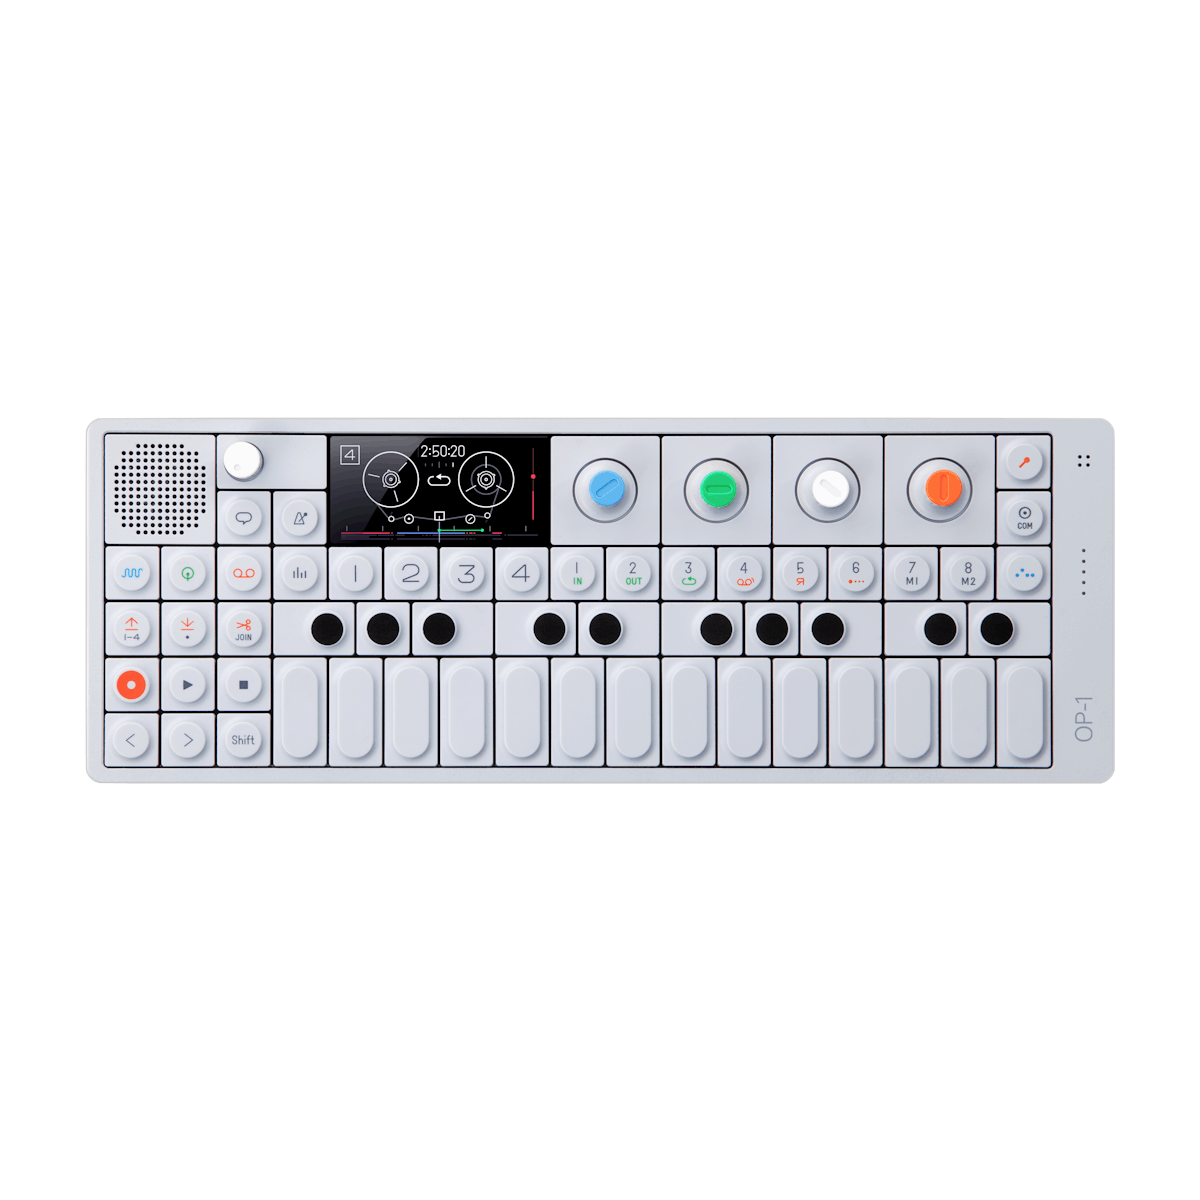 OP-1 the portable wonder synthesizer - teenage engineering